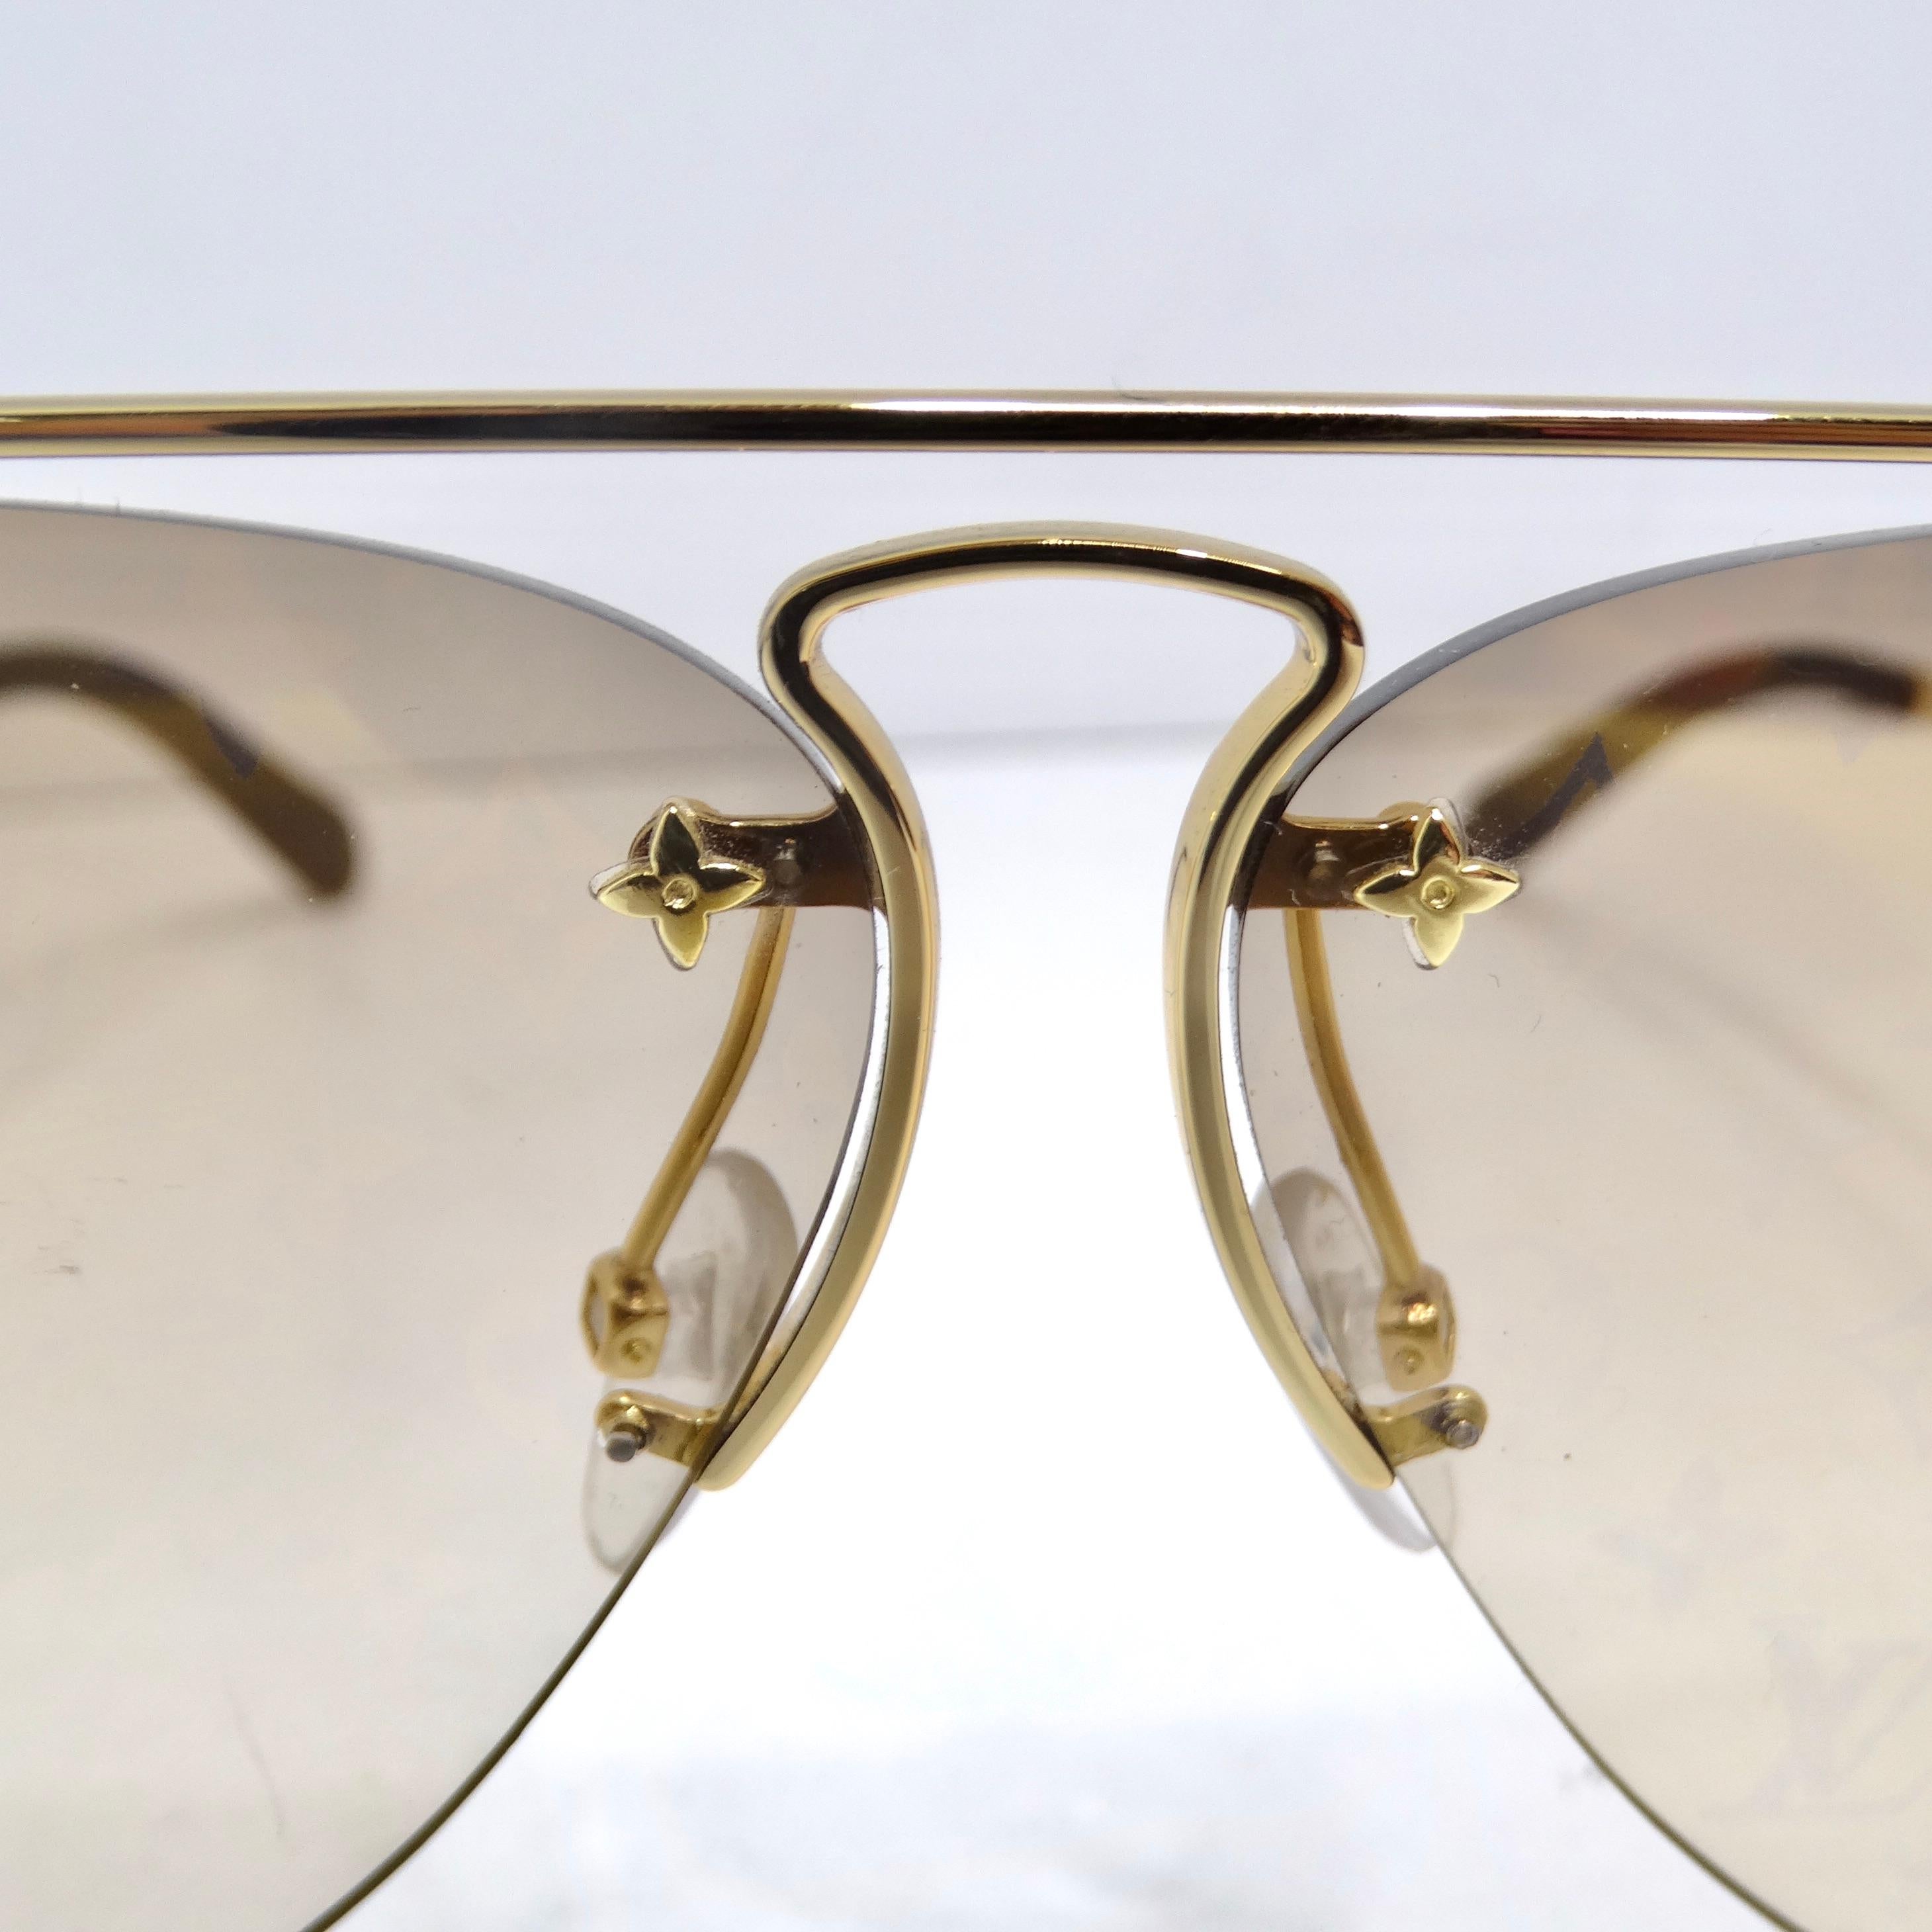 Louis Vuitton Monogram Grease Gradient Sunglasses In Excellent Condition For Sale In Scottsdale, AZ